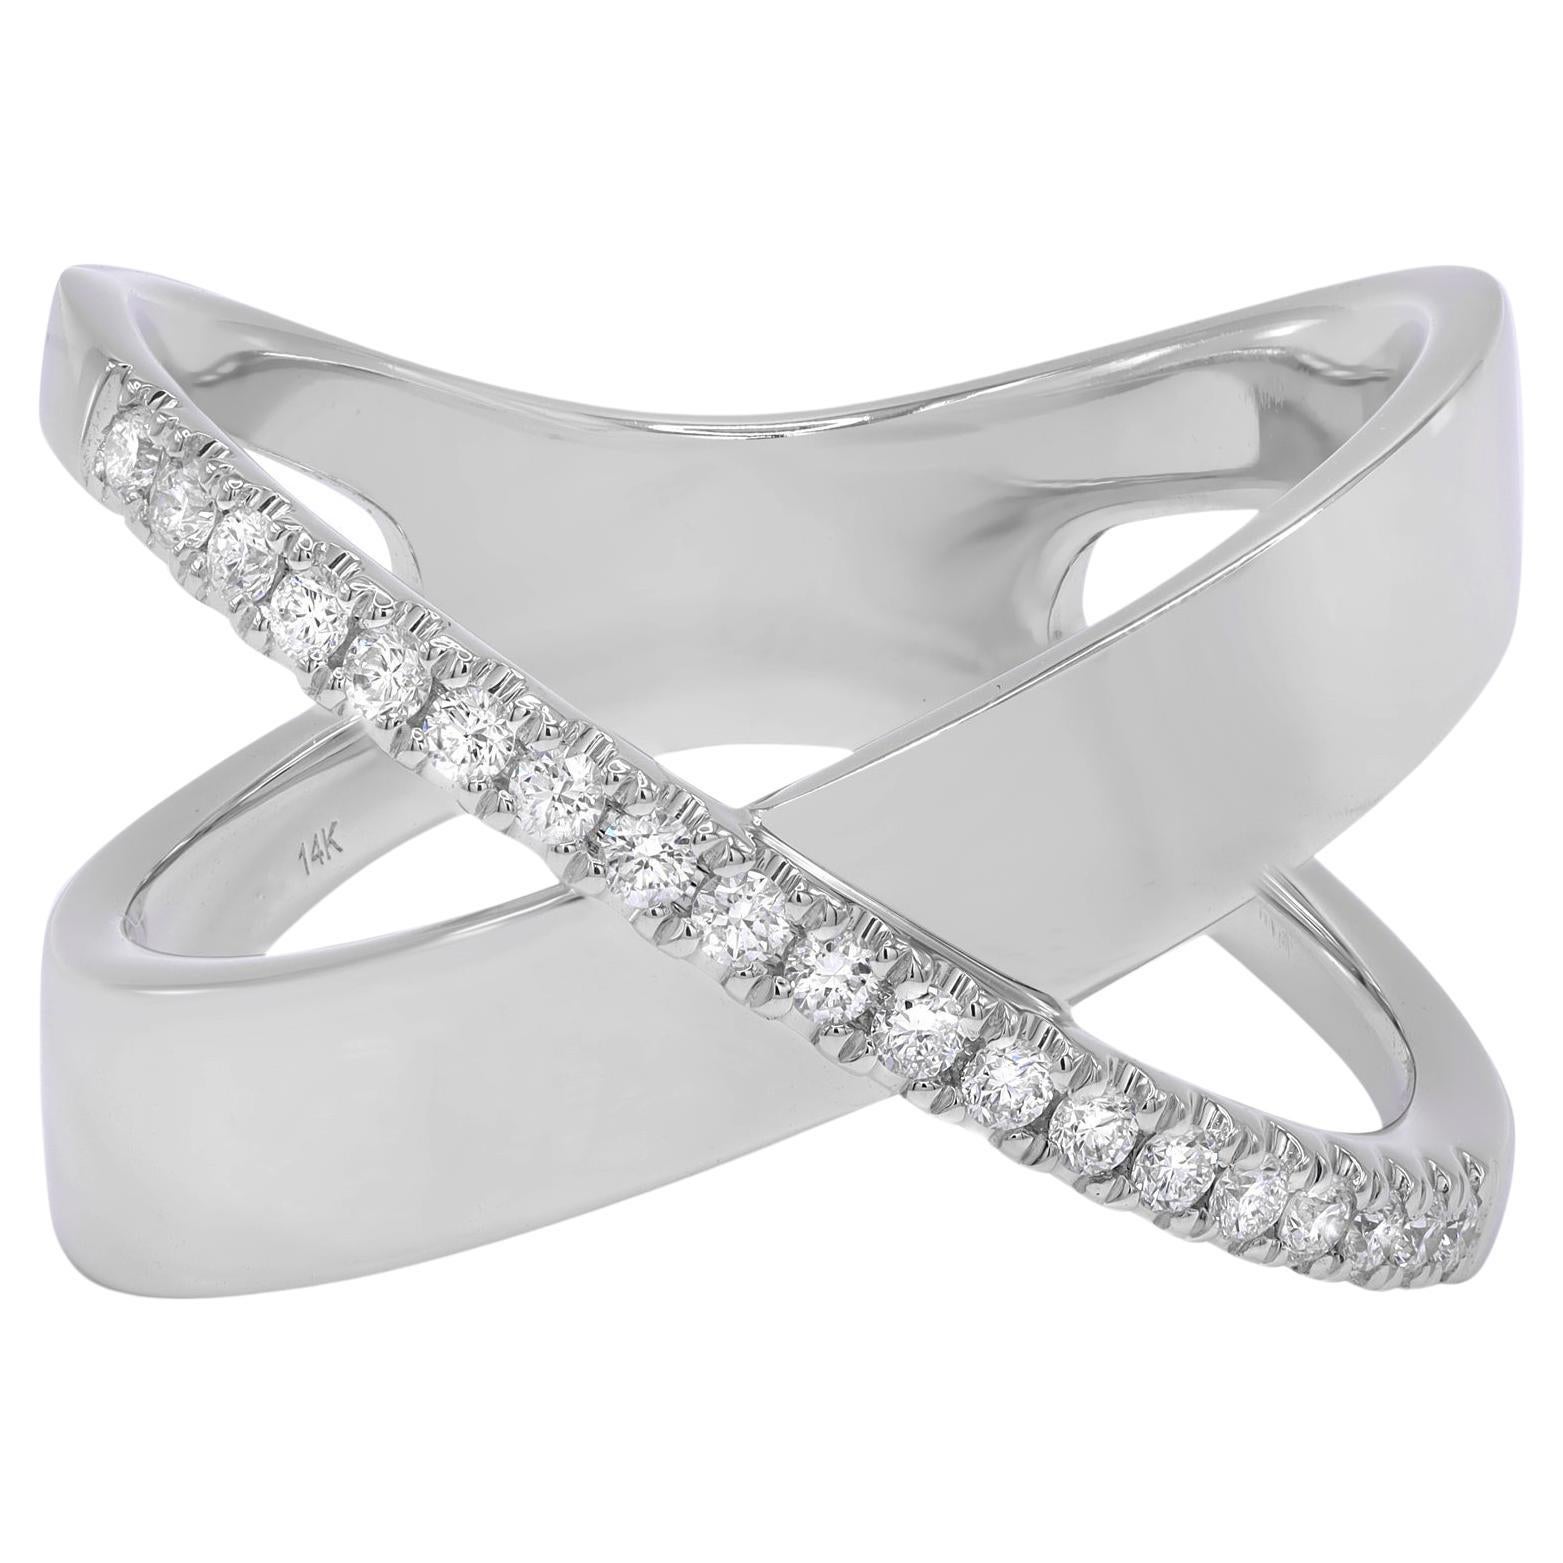 Rachel Koen Pave Diamond X Ring Band 14K White Gold 0.19Cttw Size 7 For Sale